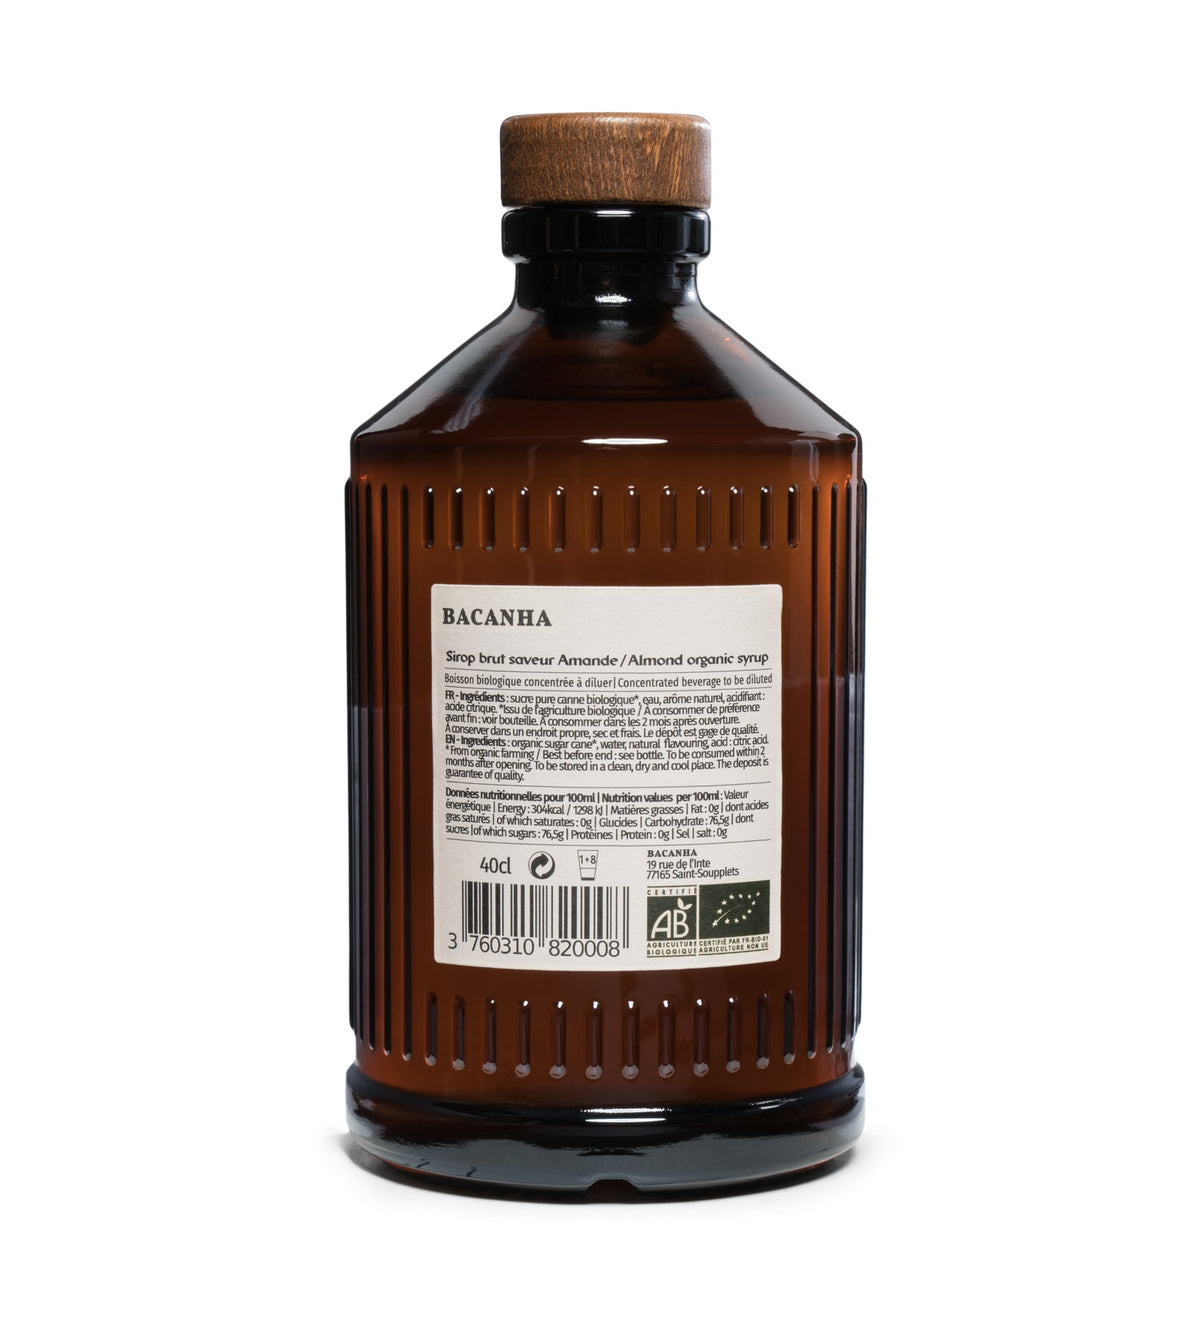 &lt;tc&gt;Bacanha Almond flavored syrup [ORGANIC]&lt;/tc&gt;